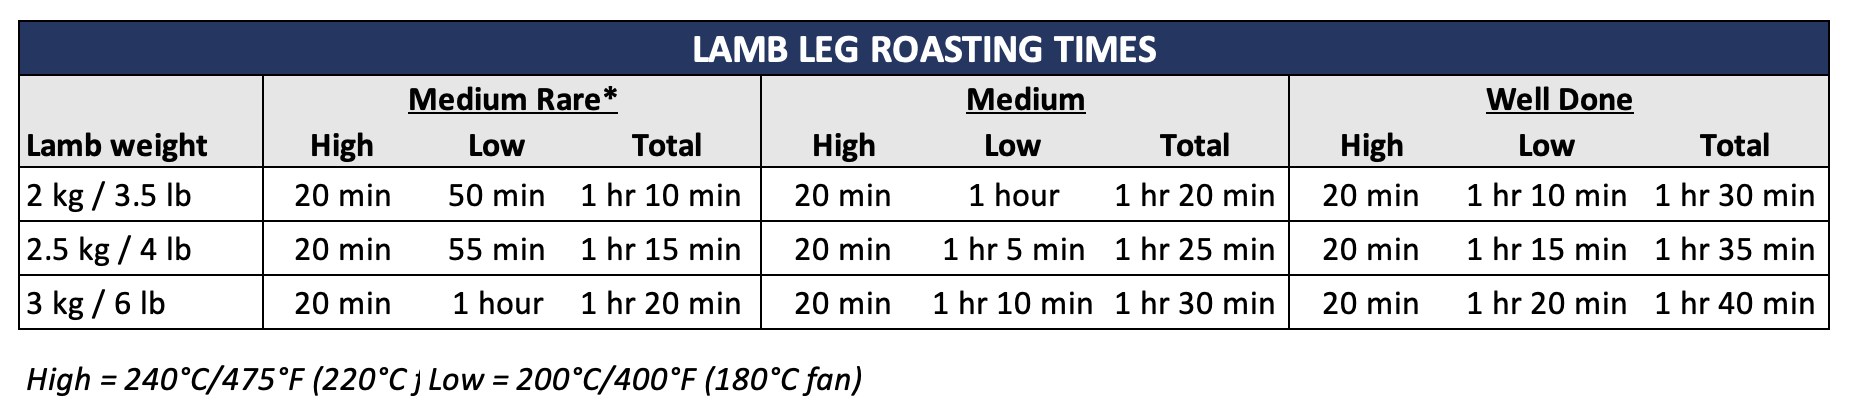 Roast lamb leg cook times